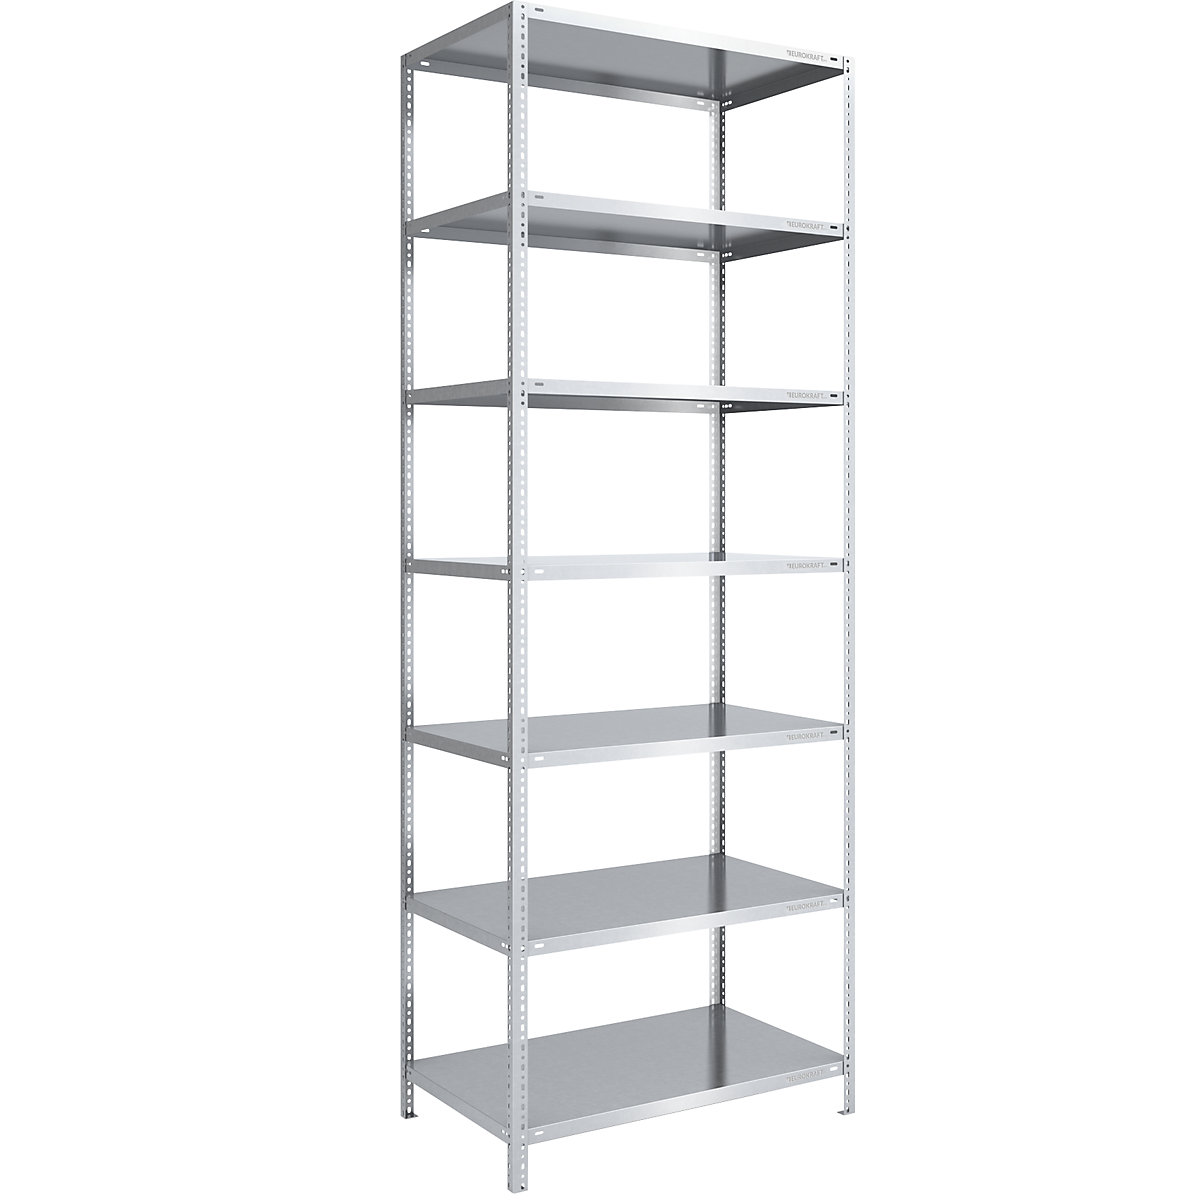 Bolt-together storage shelving, zinc plated, medium duty – eurokraft pro, shelf unit height 3000 mm, shelf width 1000 mm, depth 800 mm, standard shelf unit-9